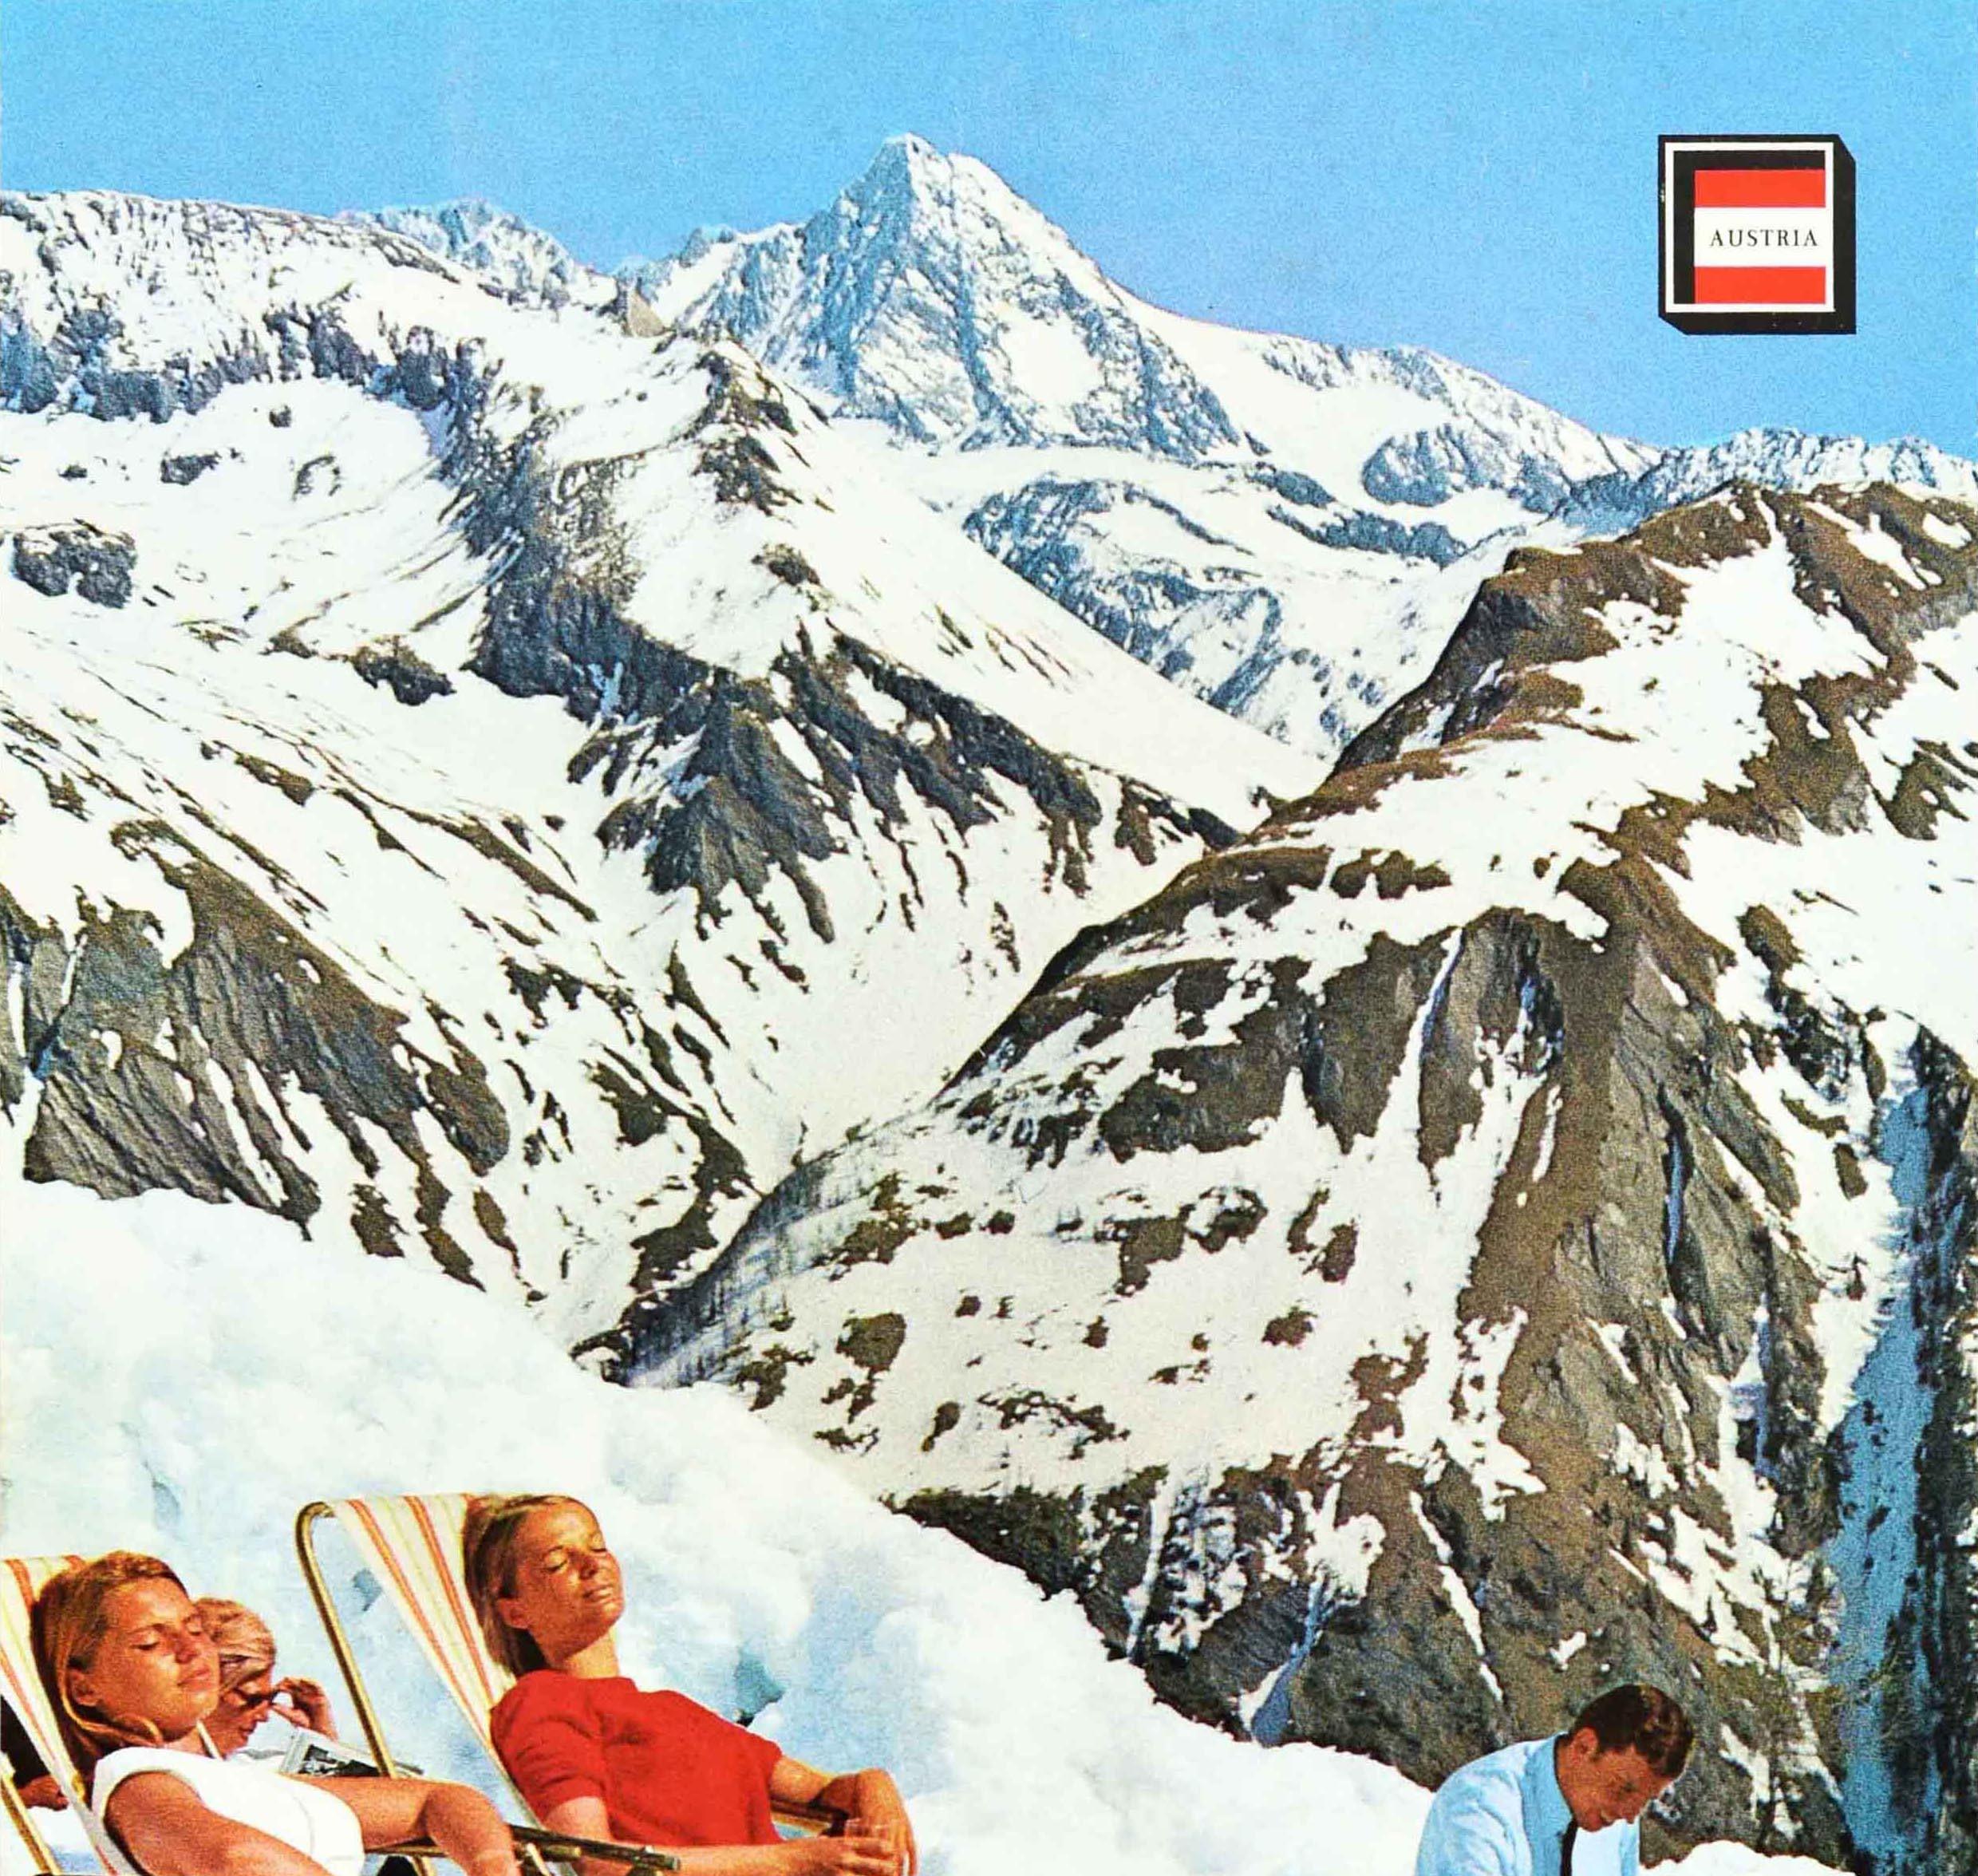 Original Vintage Winter Travel Poster Osterreich Austria Skiing Sunbathing Photo - Print by Egger